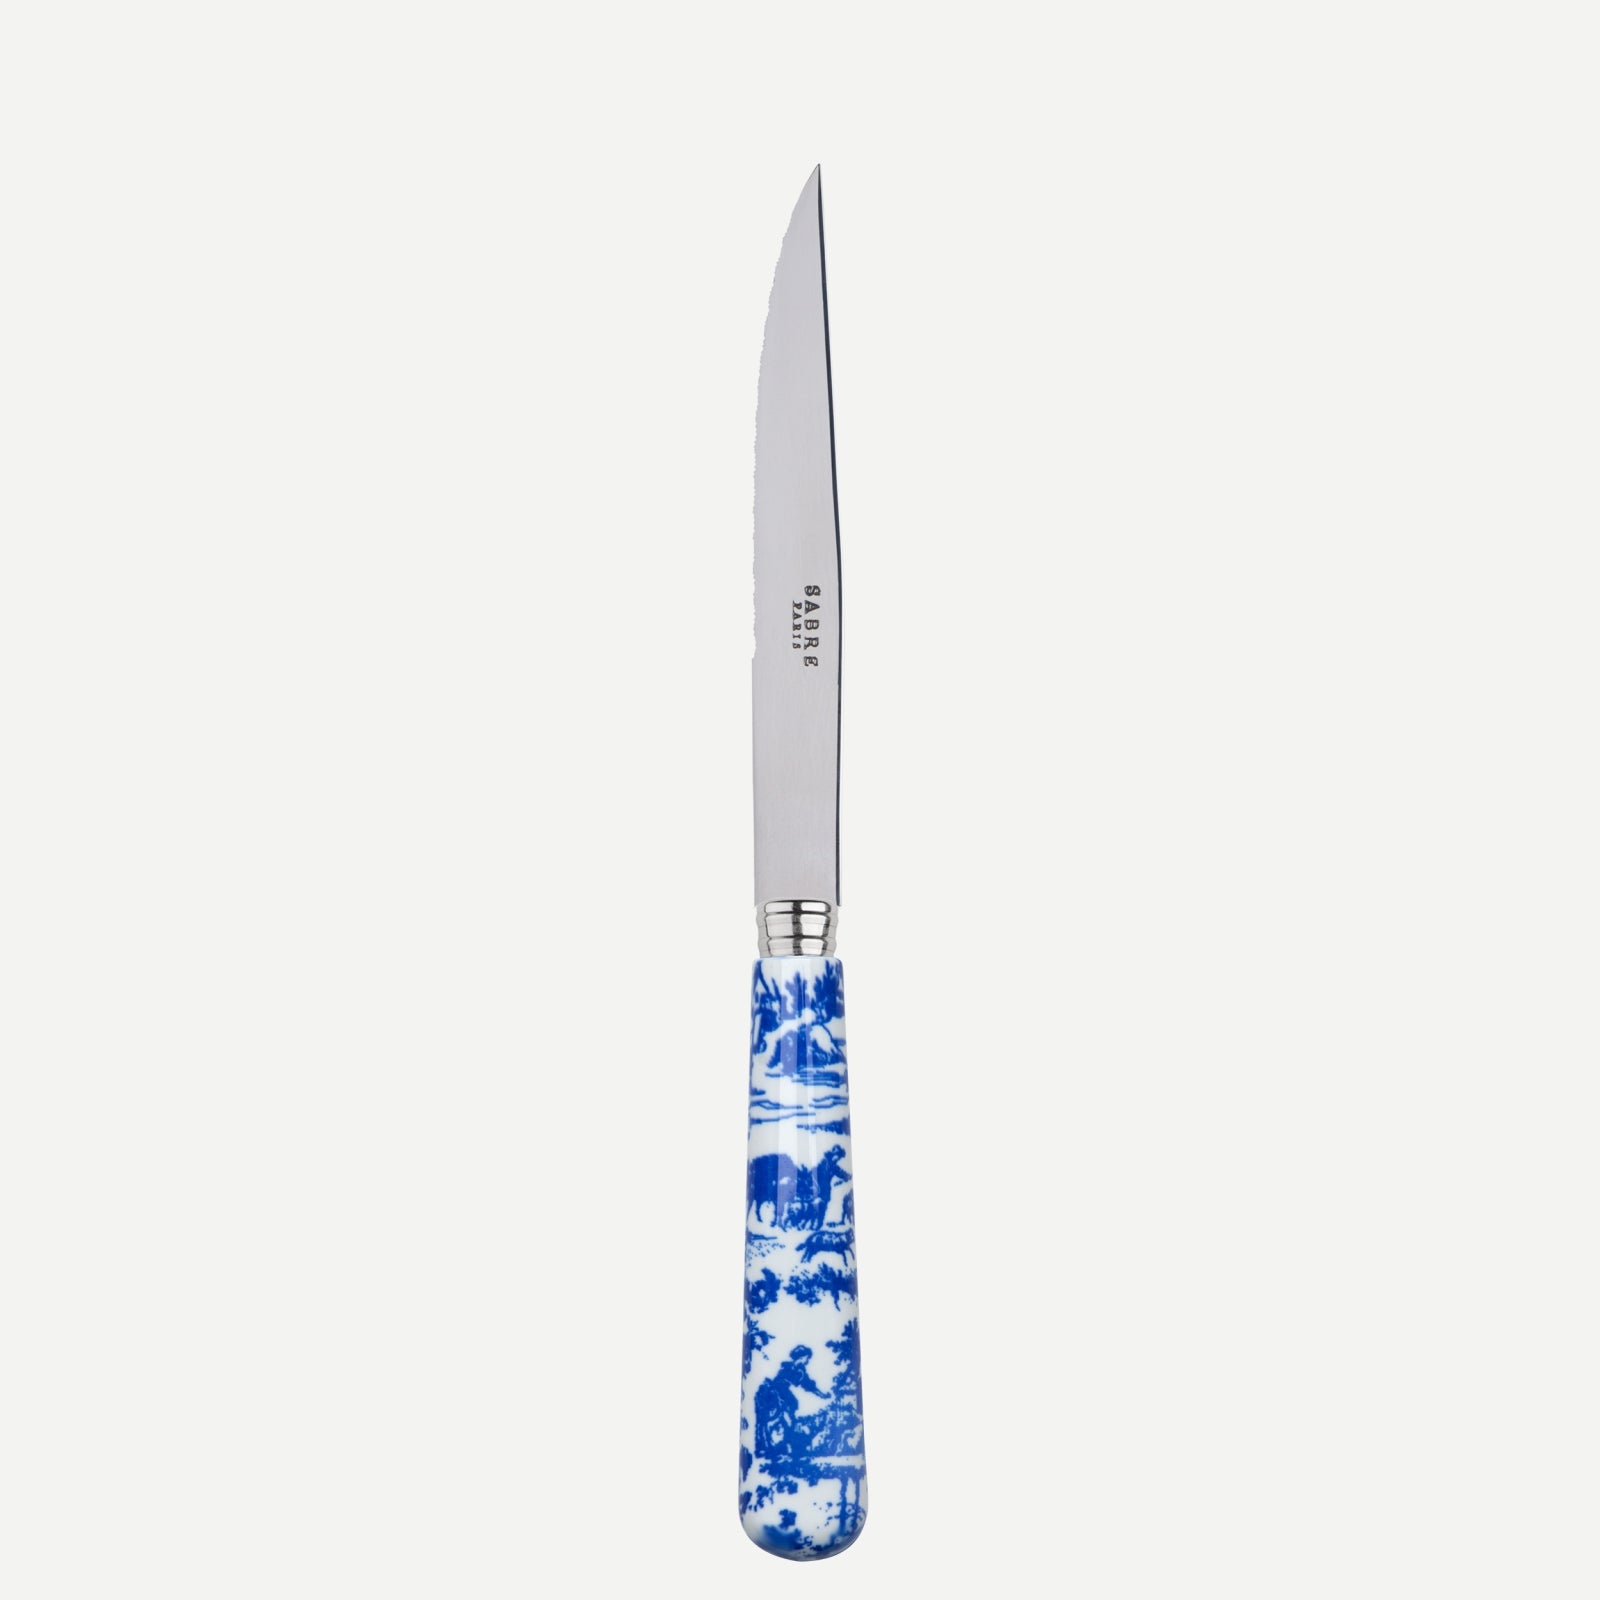 Steack knife - toile de jouy - Blue